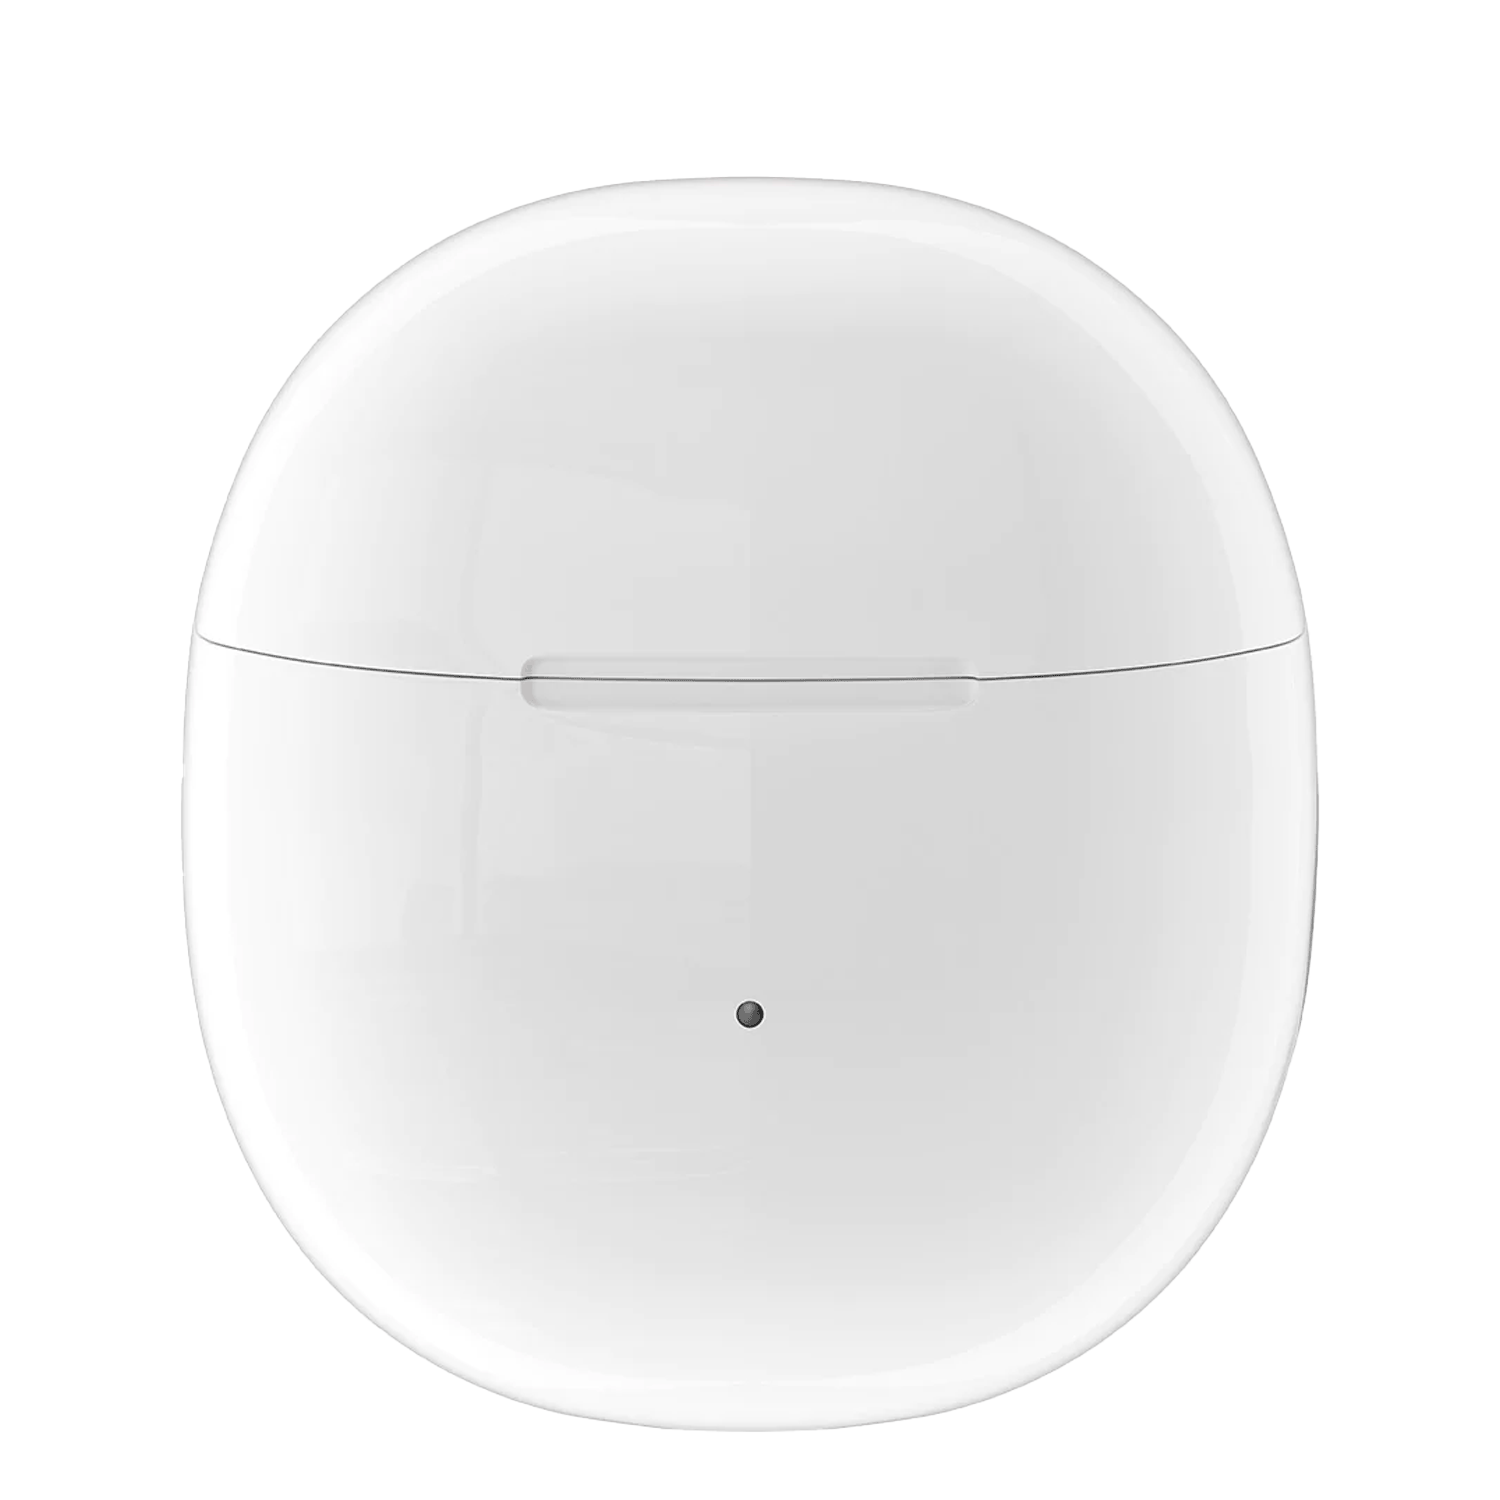 Fone de Ouvido QCY T18 TWS Earphones Bluetooth - Preto / Branco